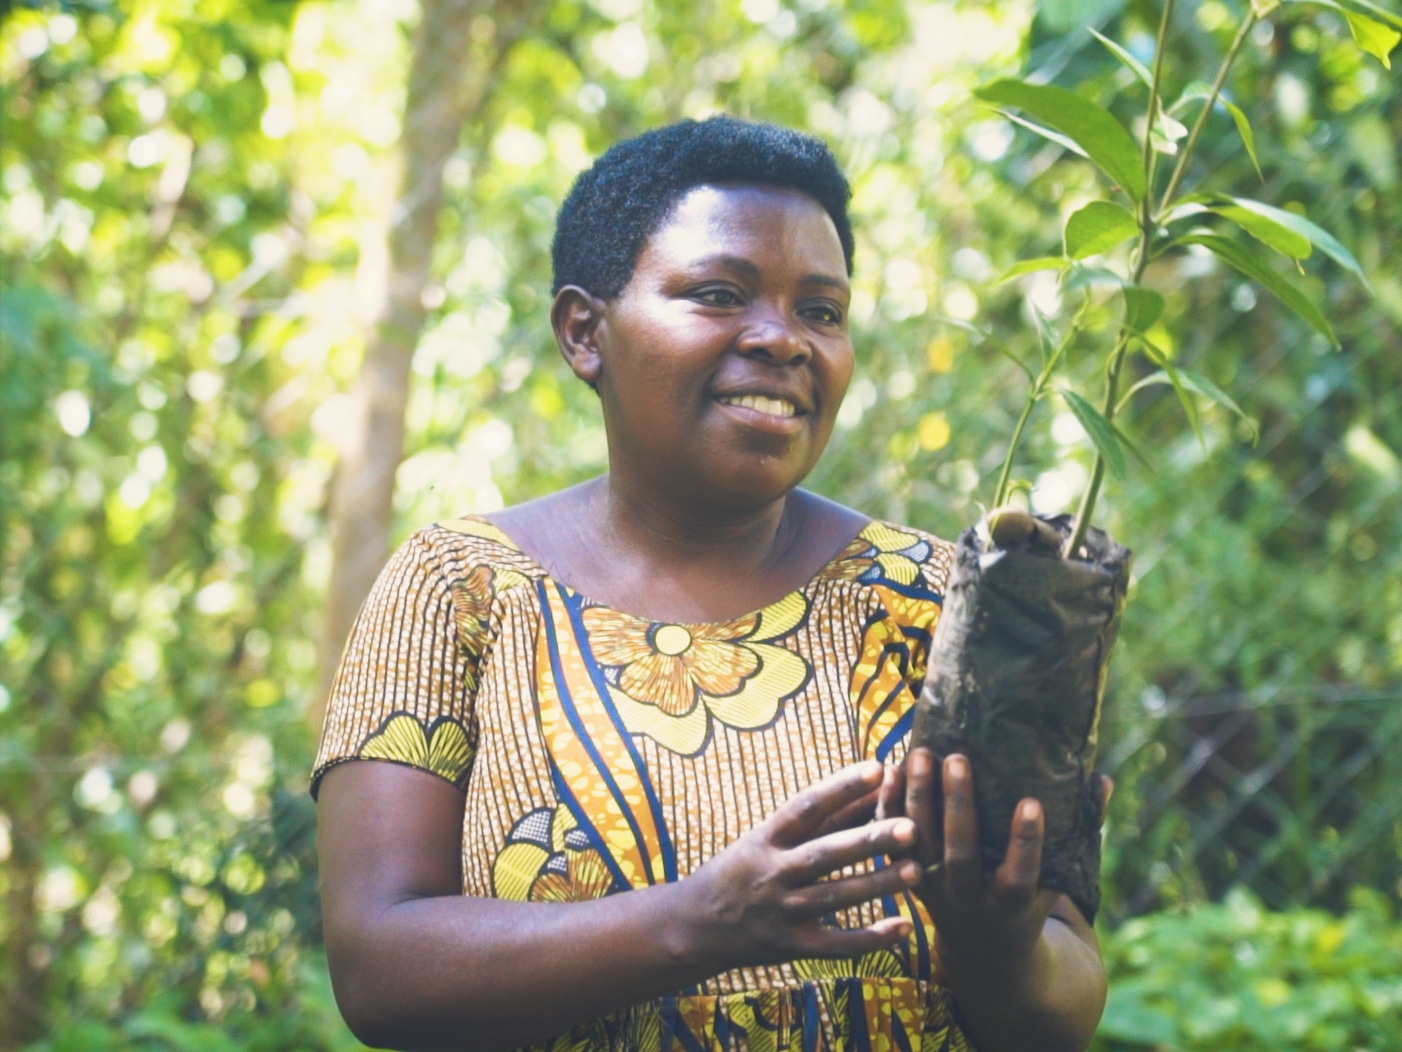 Woman in Uganda holding seedling